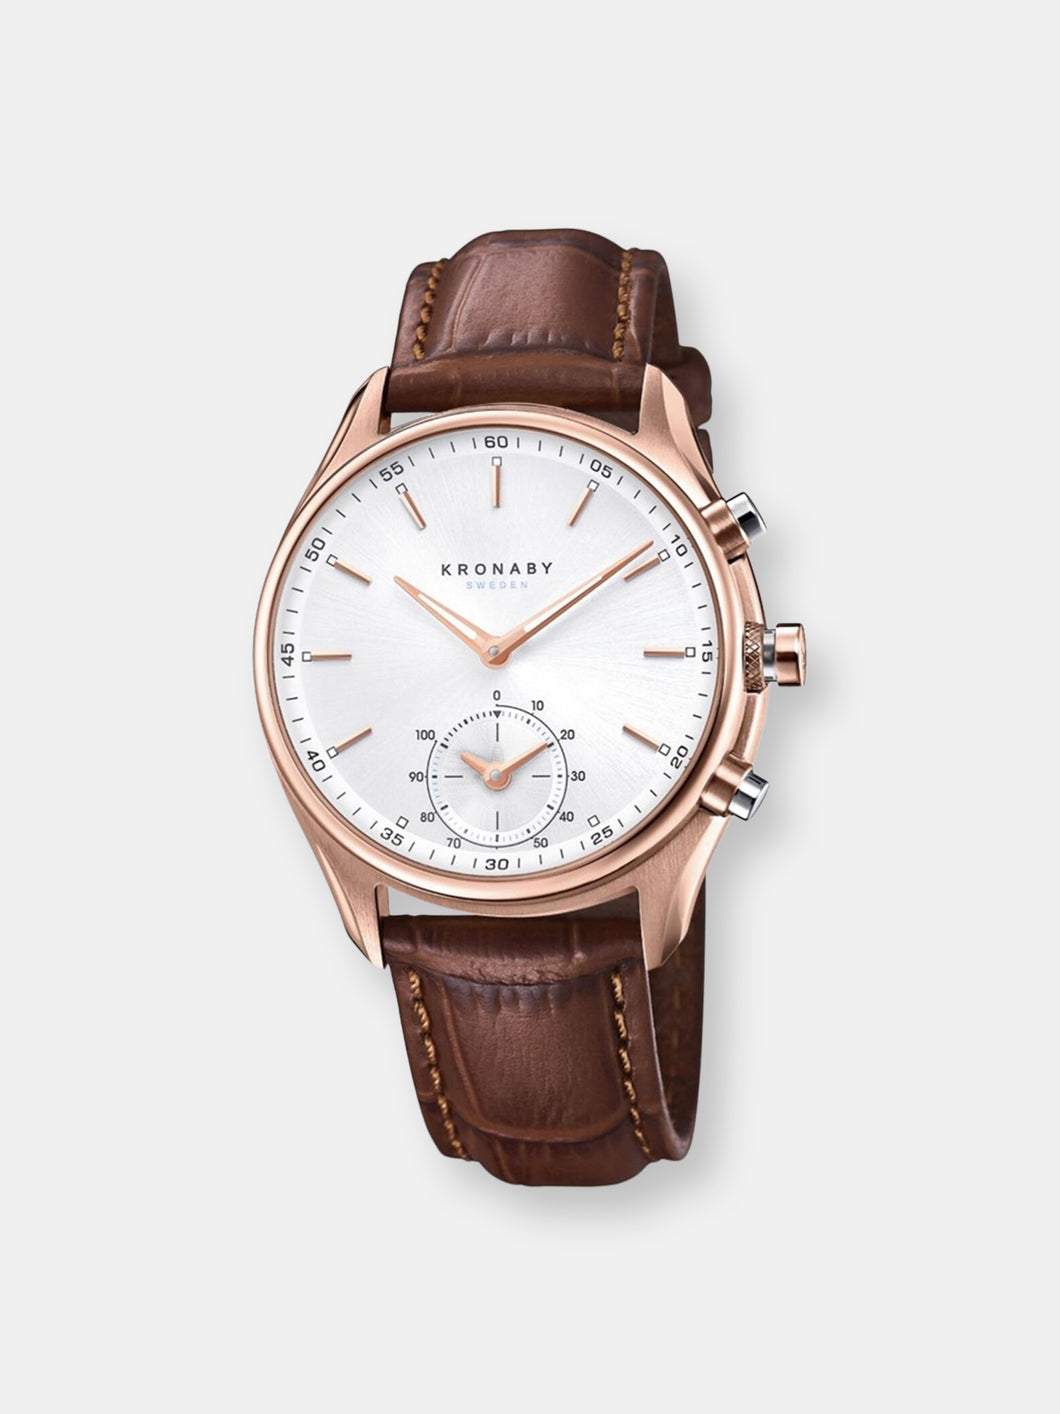 Kronaby Sekel S2746-1 Brown Leather Automatic Self Wind Smart Watch